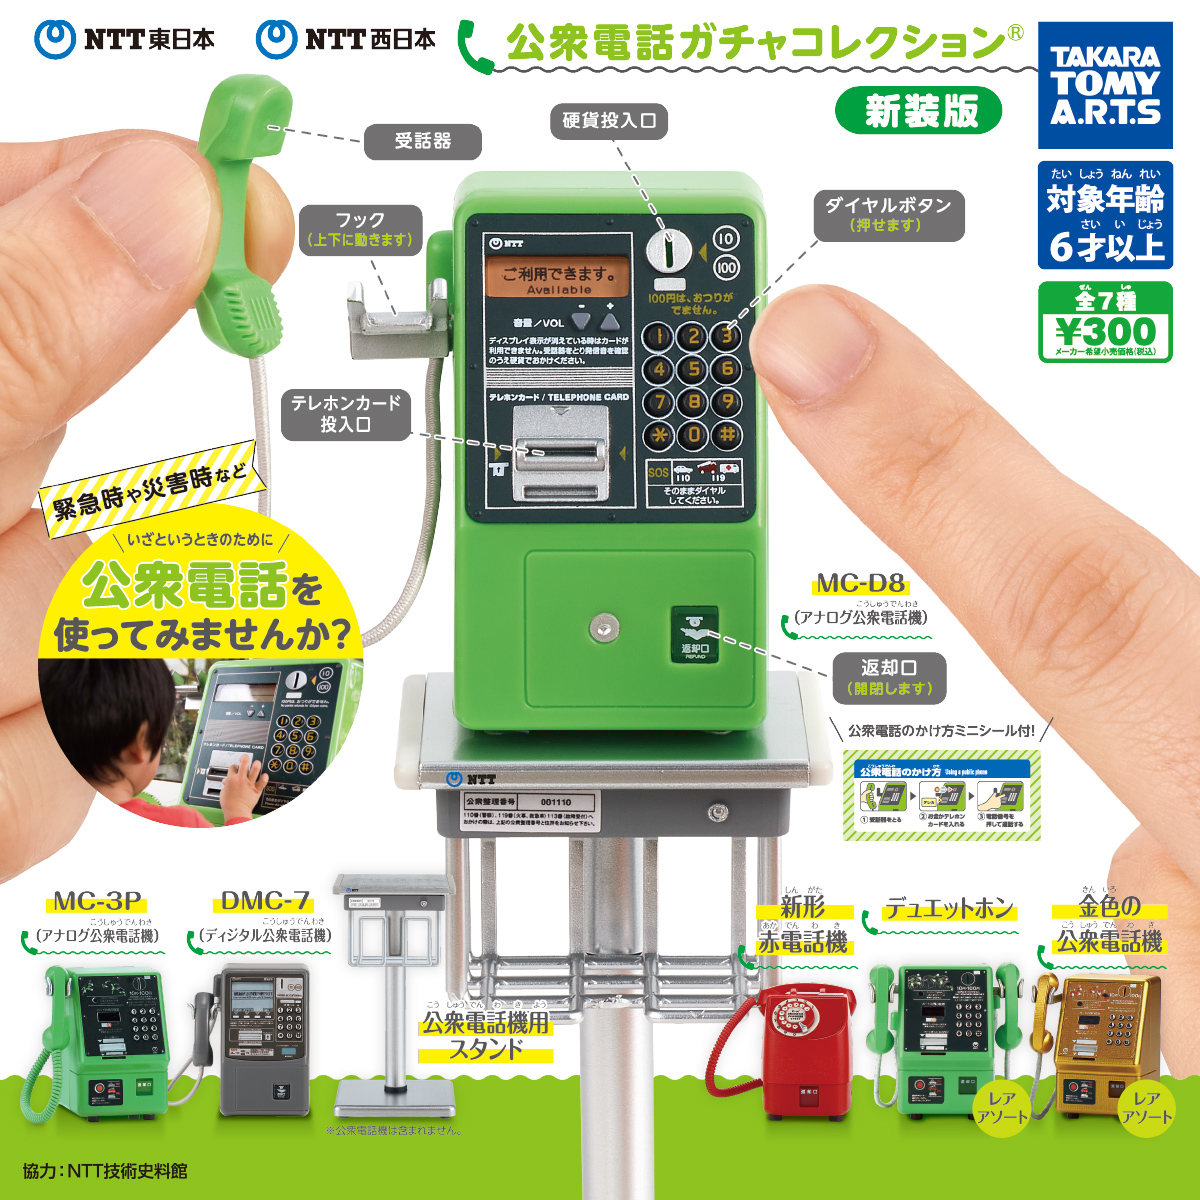 NTT東日本 NTT西日本 公衆電話ガチャコレクション 新装版